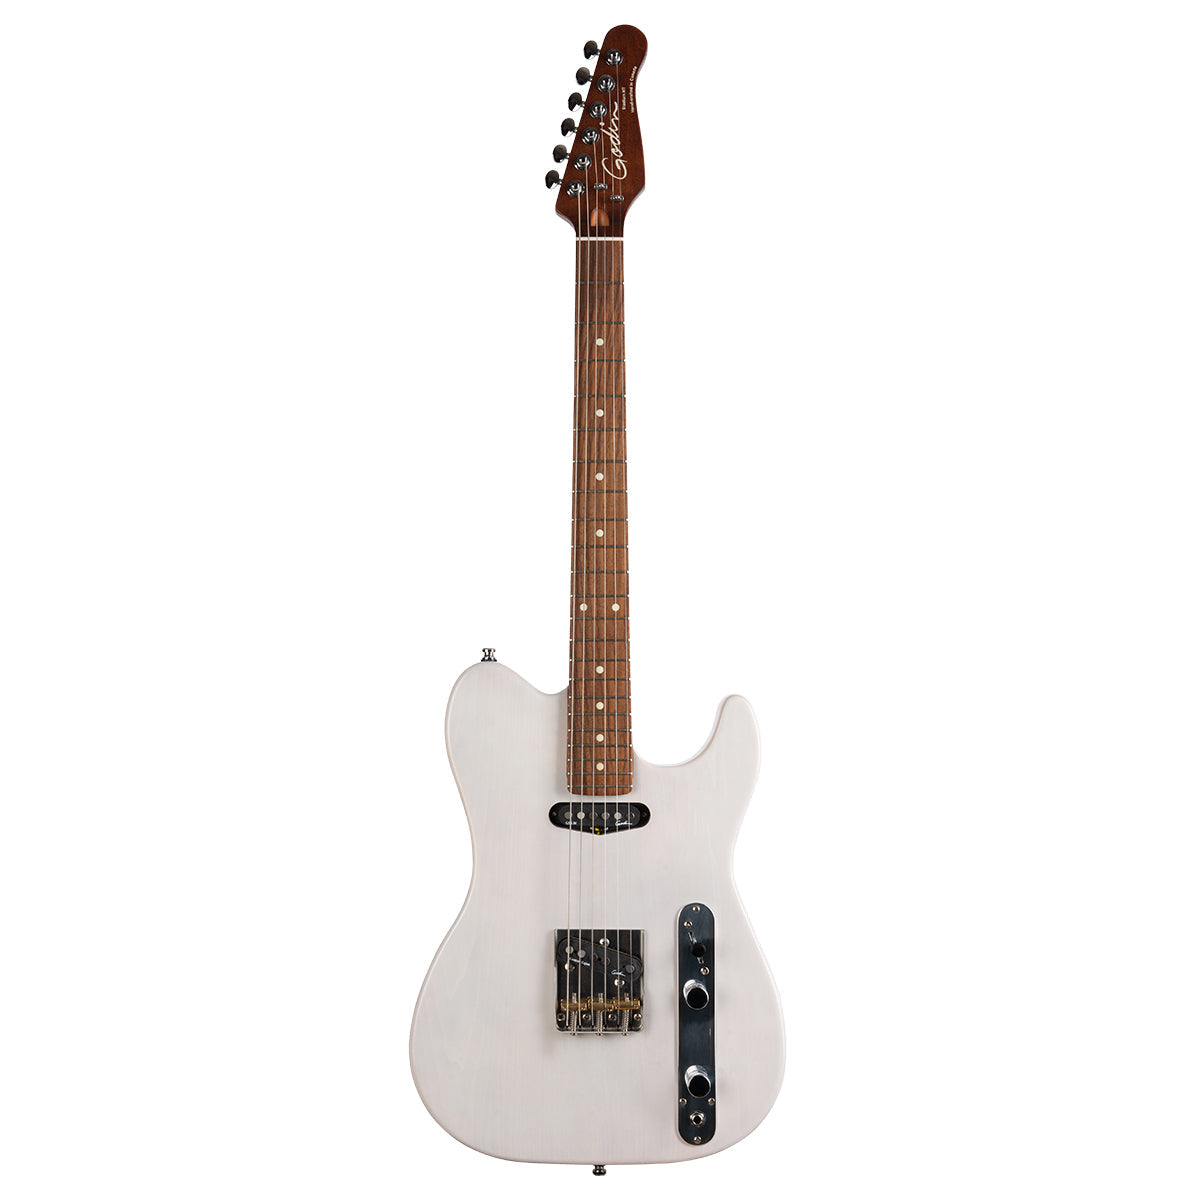 Godin Stadium HT Electric Guitar ~ Trans White RN, Electric Guitar for sale at Richards Guitars.